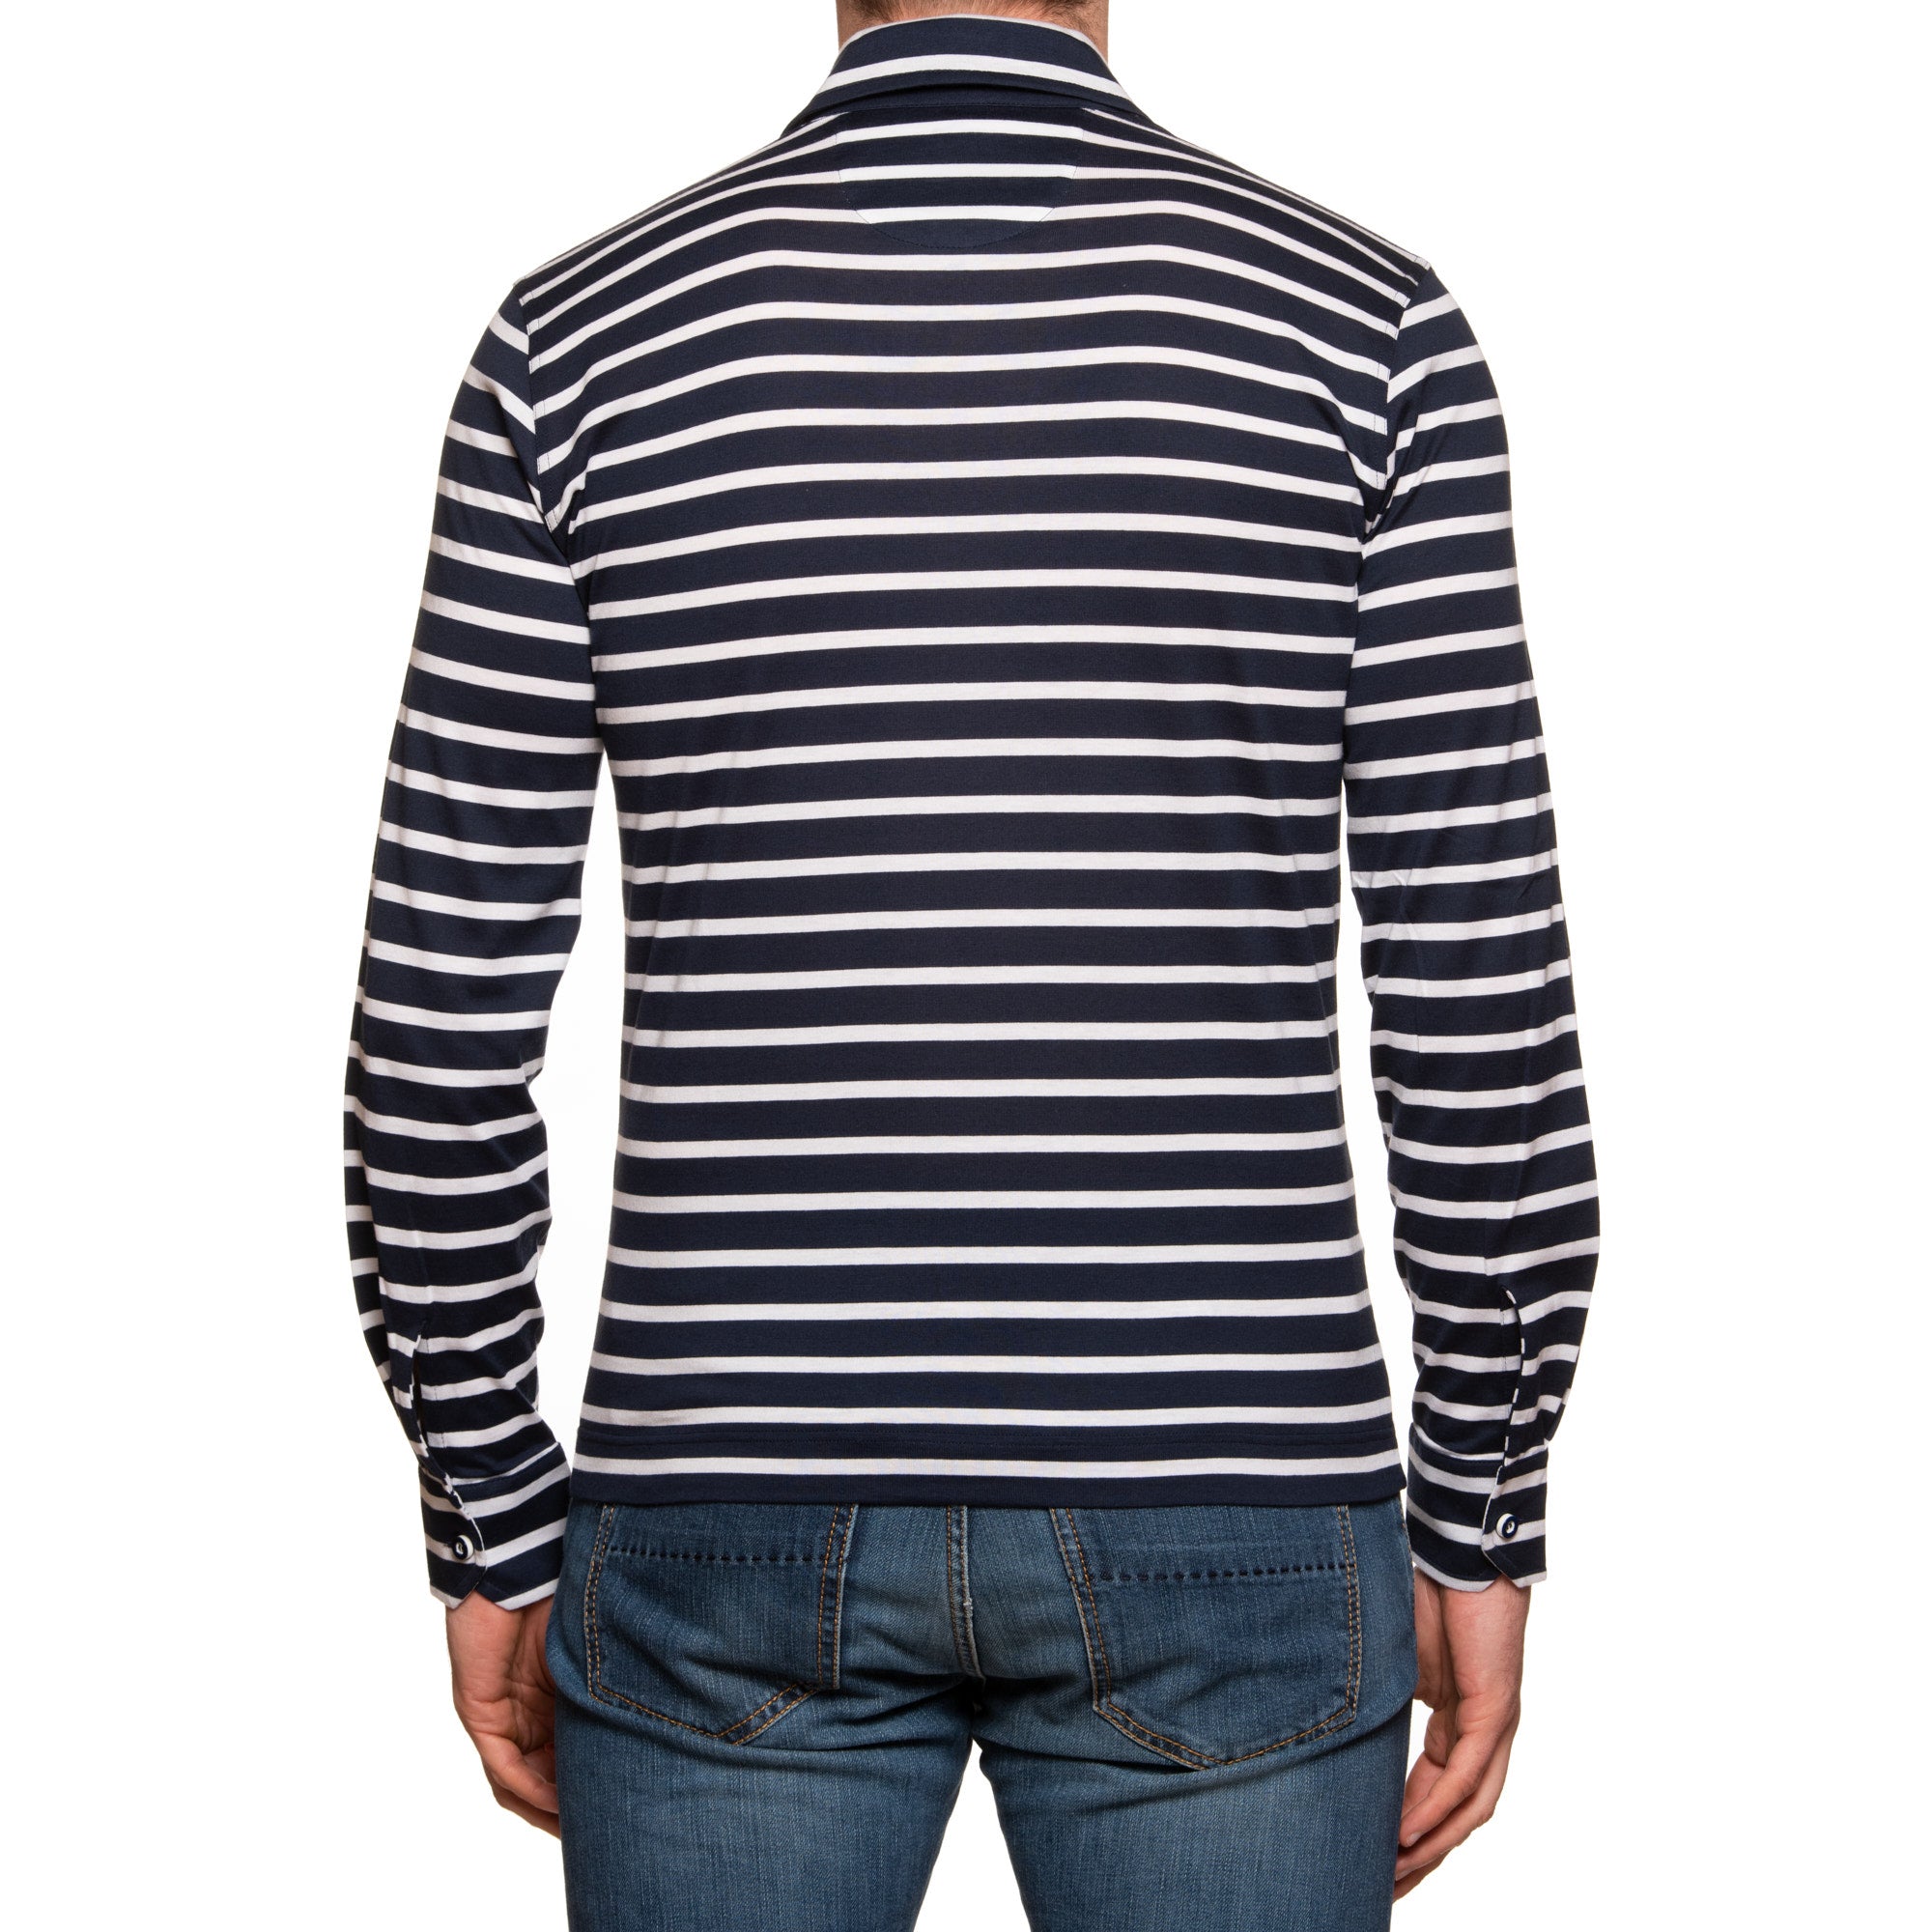 FEDELI "Partenope" Navy Blue Striped Sea Island Cotton Jersey Polo Shirt 50 NEW US M FEDELI